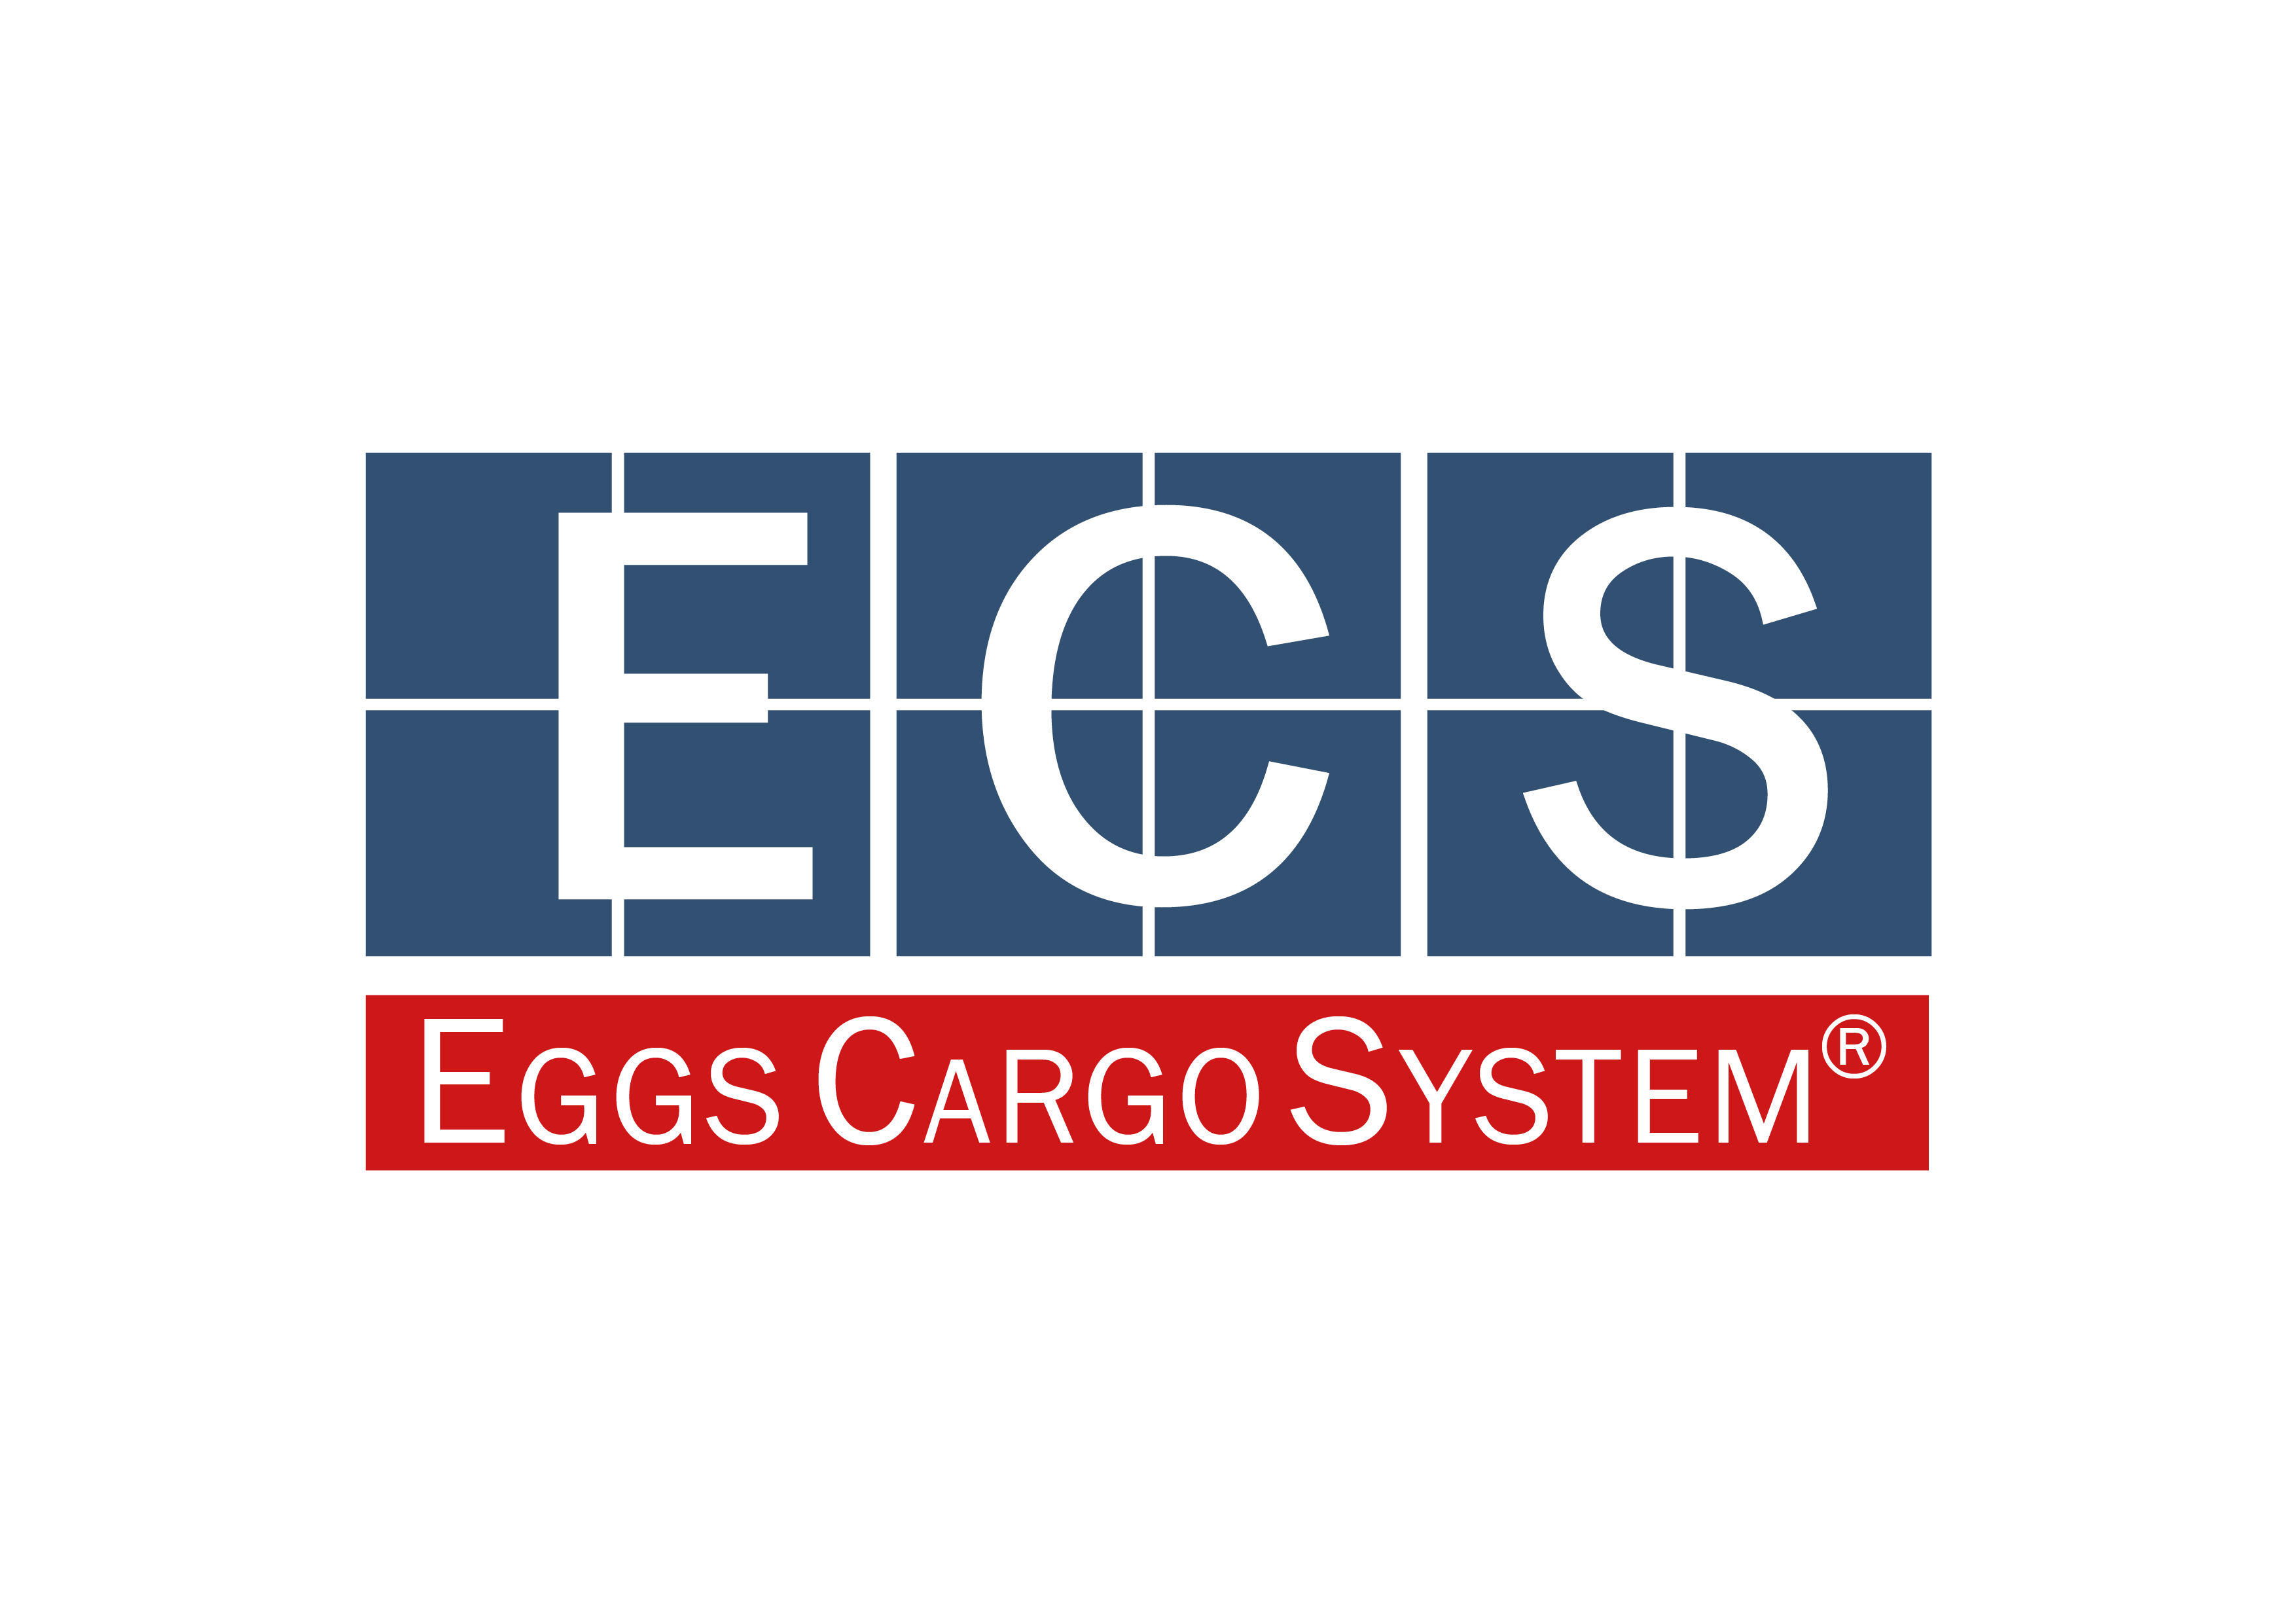 ECS logo New per August 2018